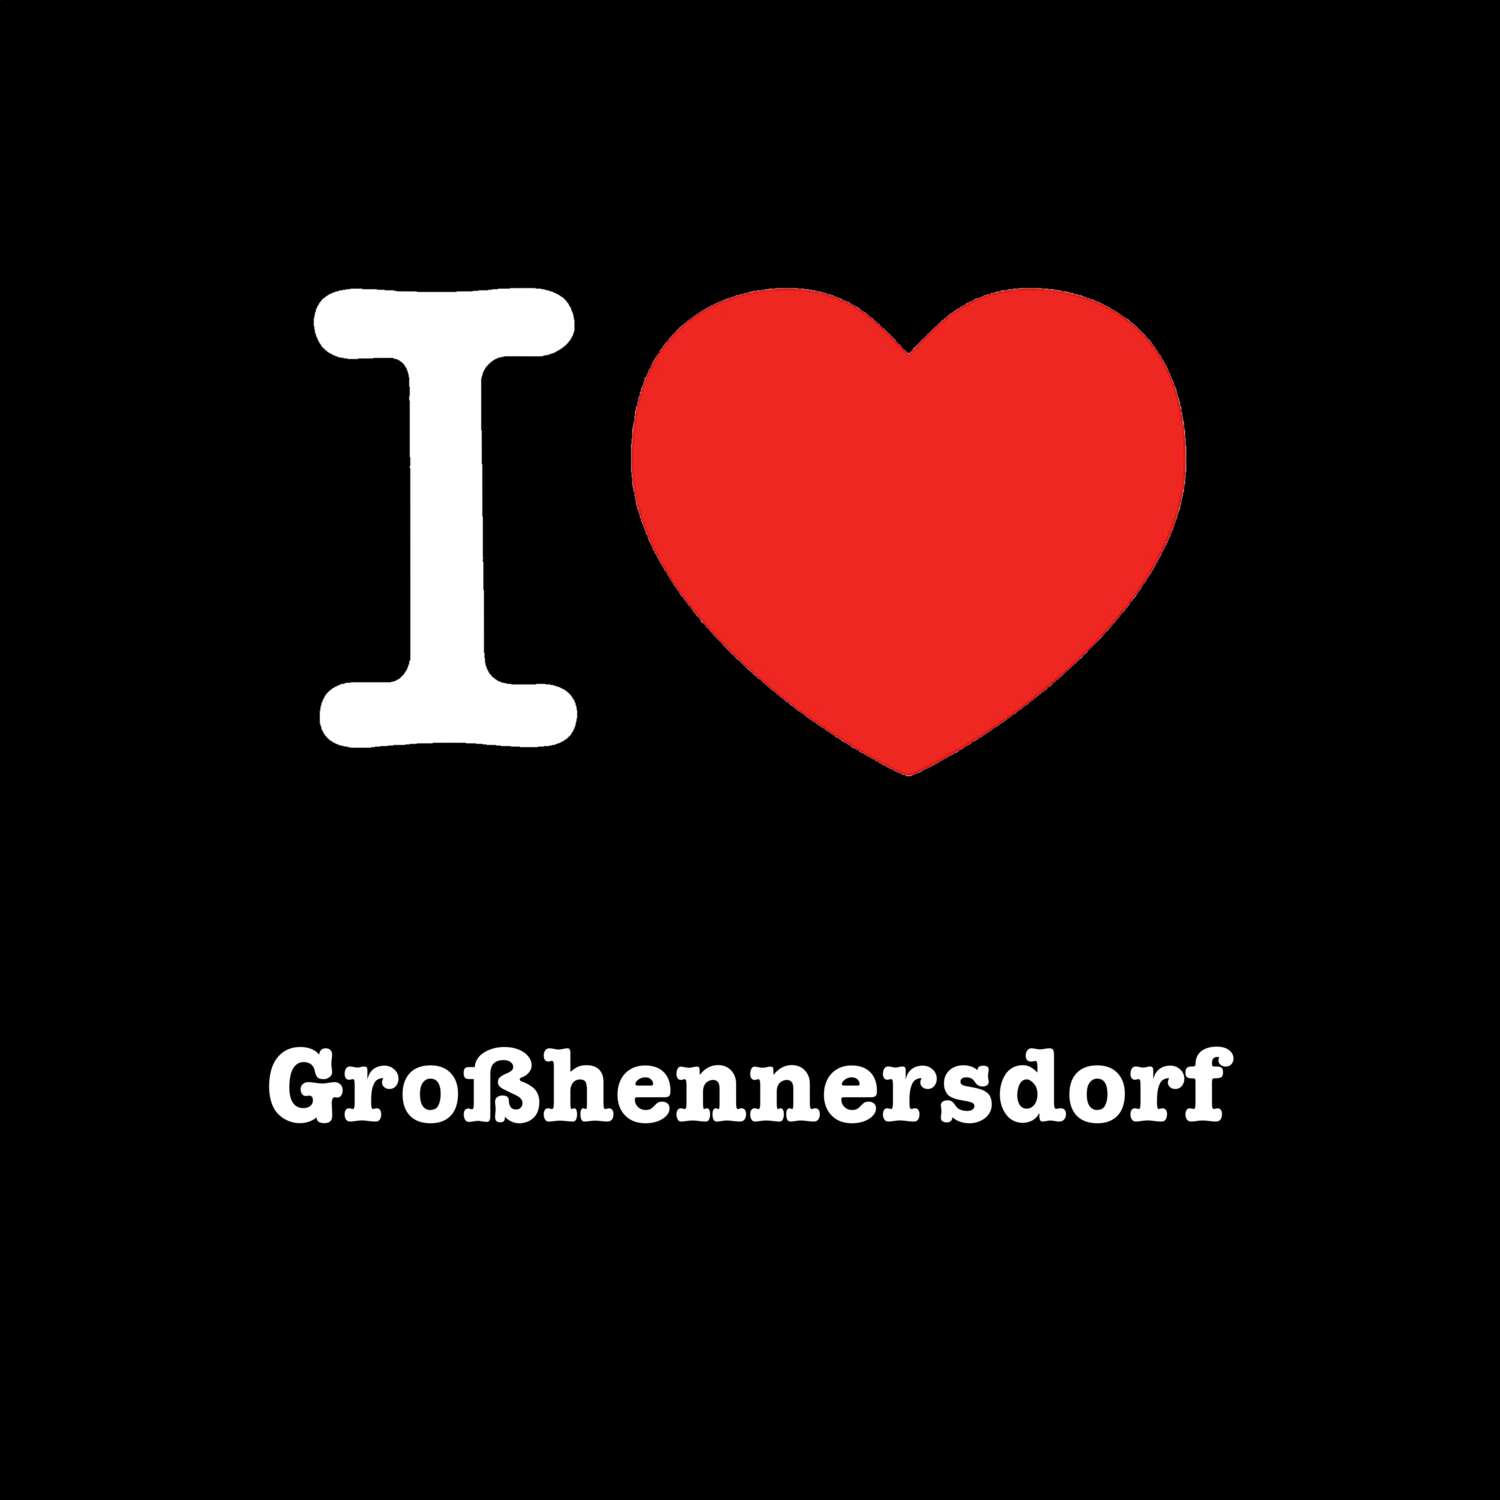 Großhennersdorf T-Shirt »I love«